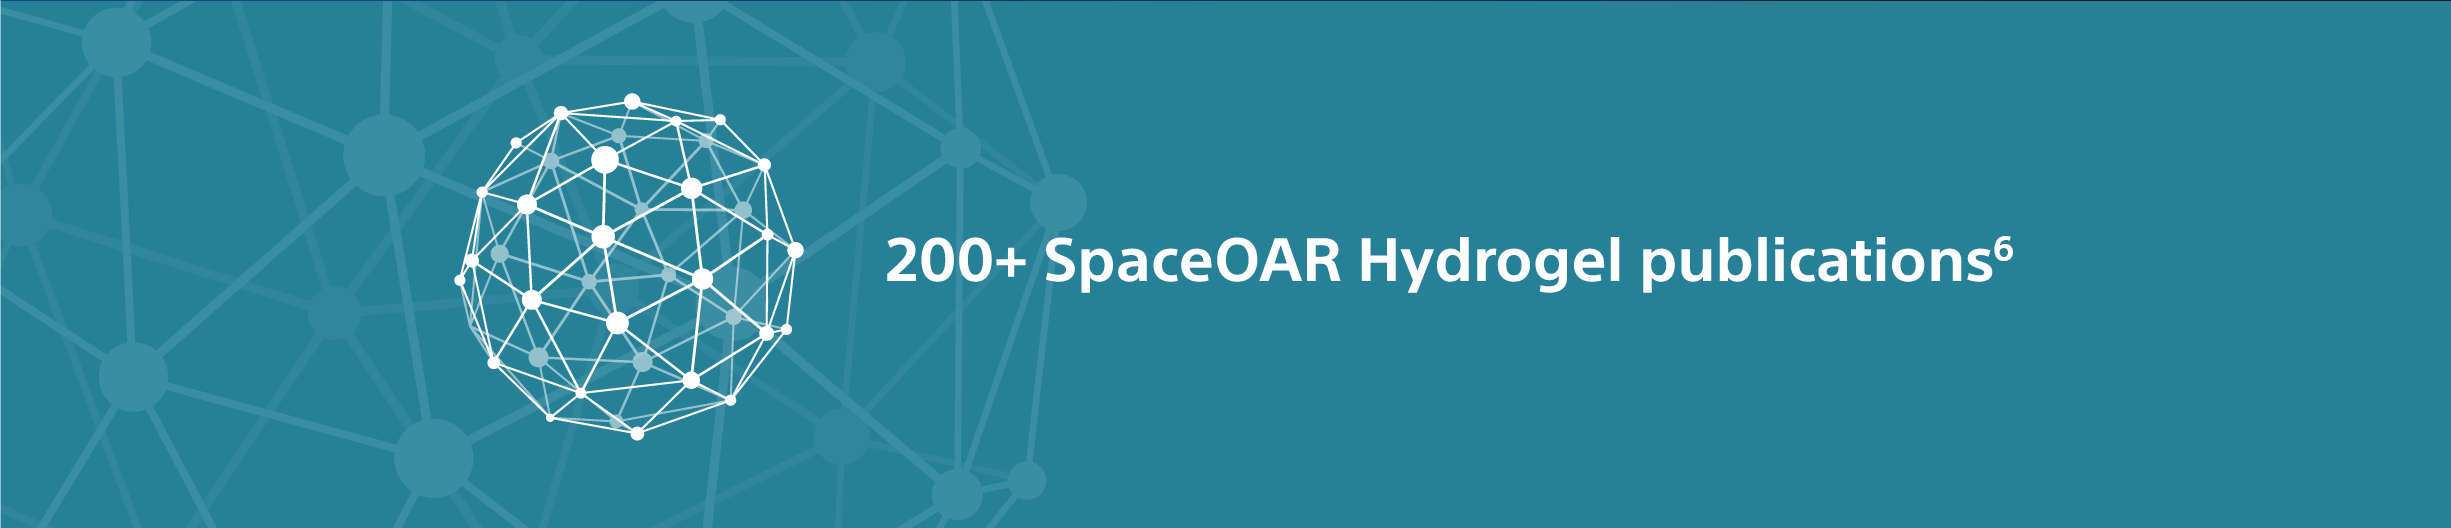 200+ SpaceOAR Hydrogel publications